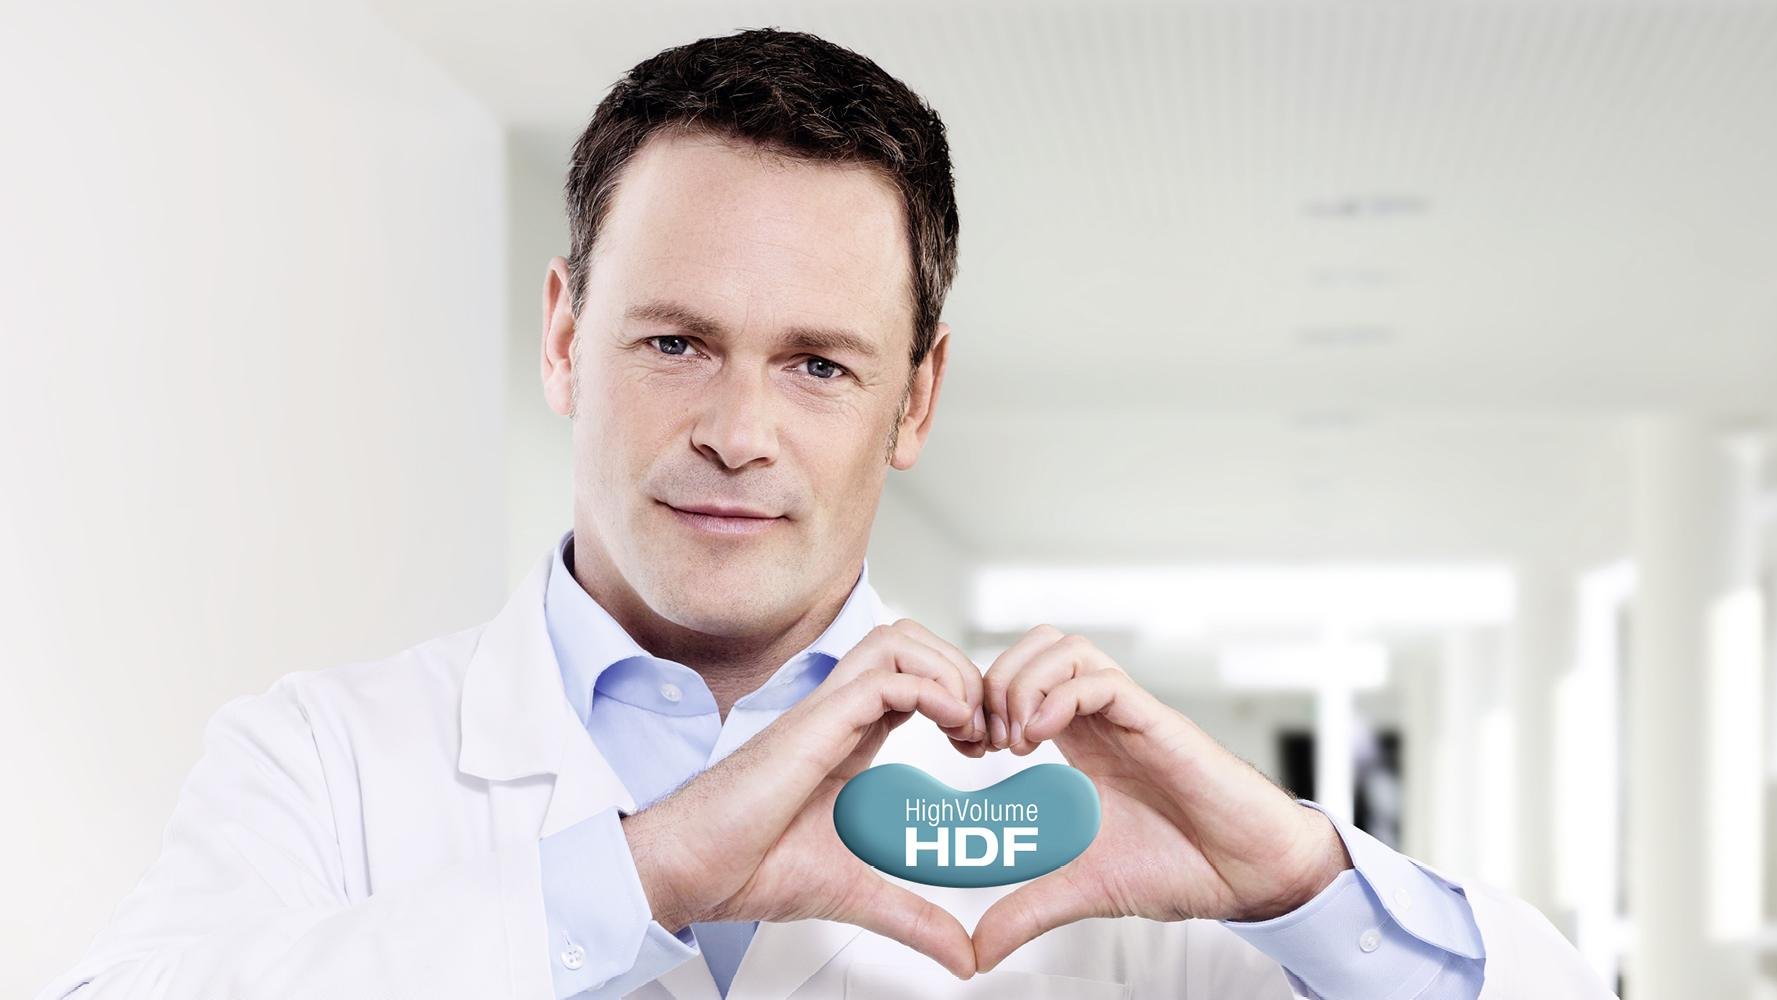 HighVolumeHDF is Fresenius Medical Care